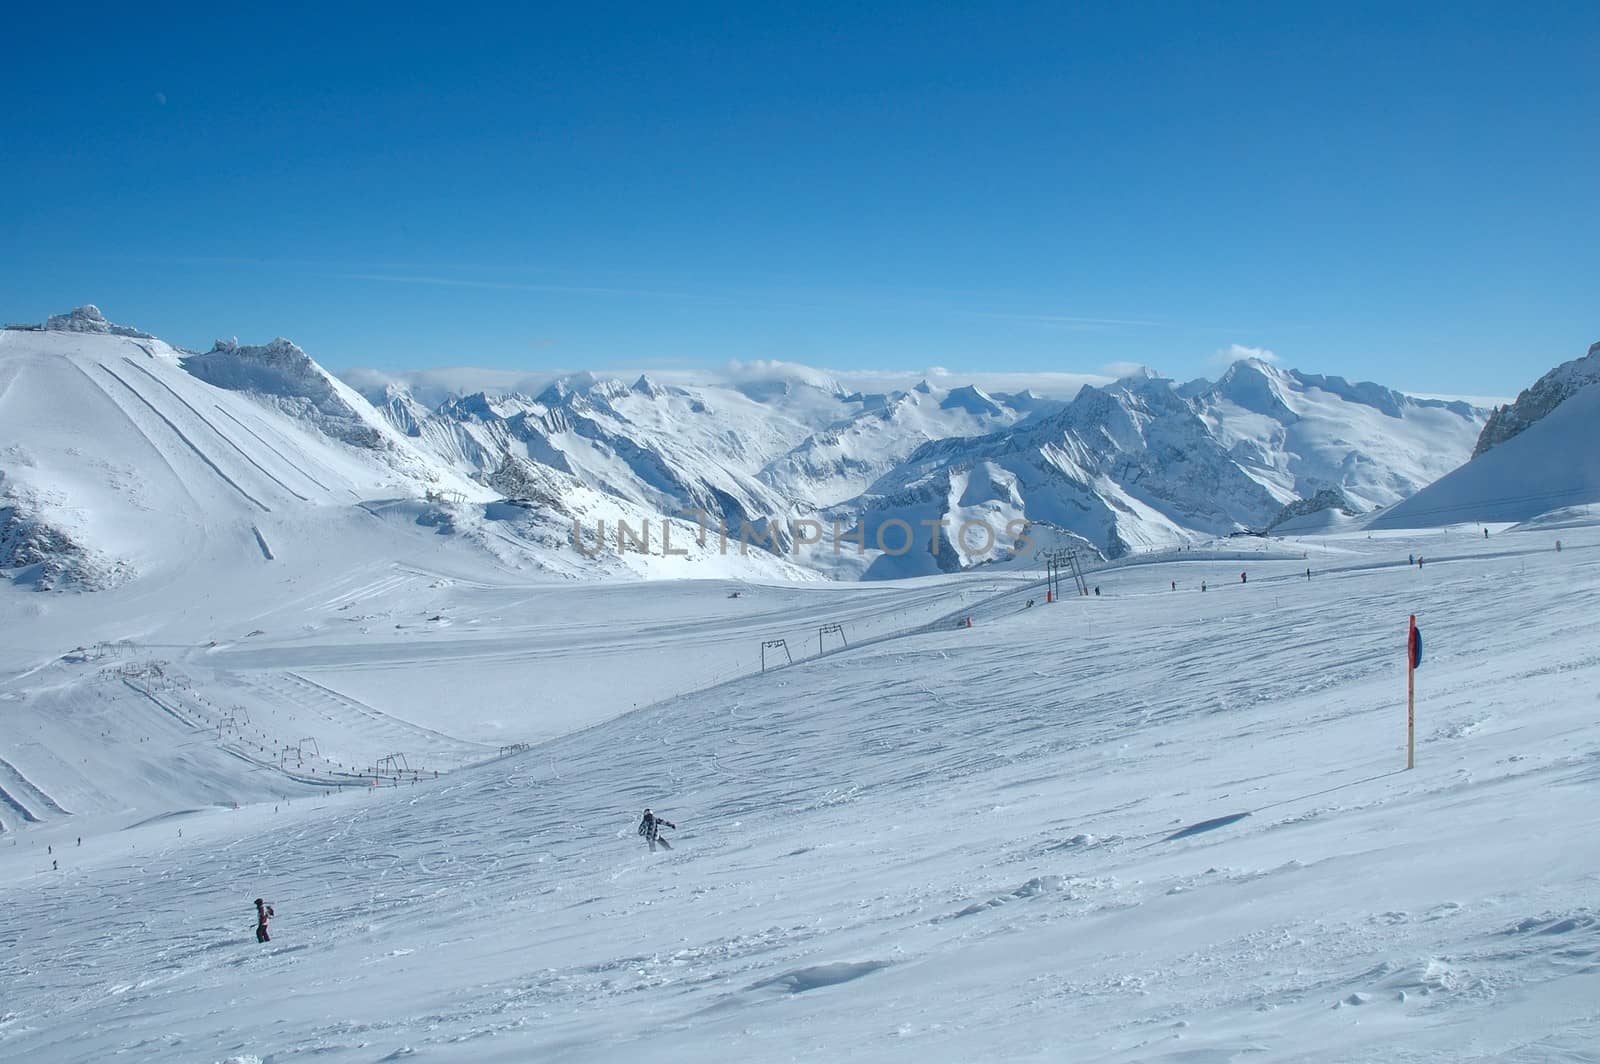 Ski slopes on Hintertux glacier by janhetman